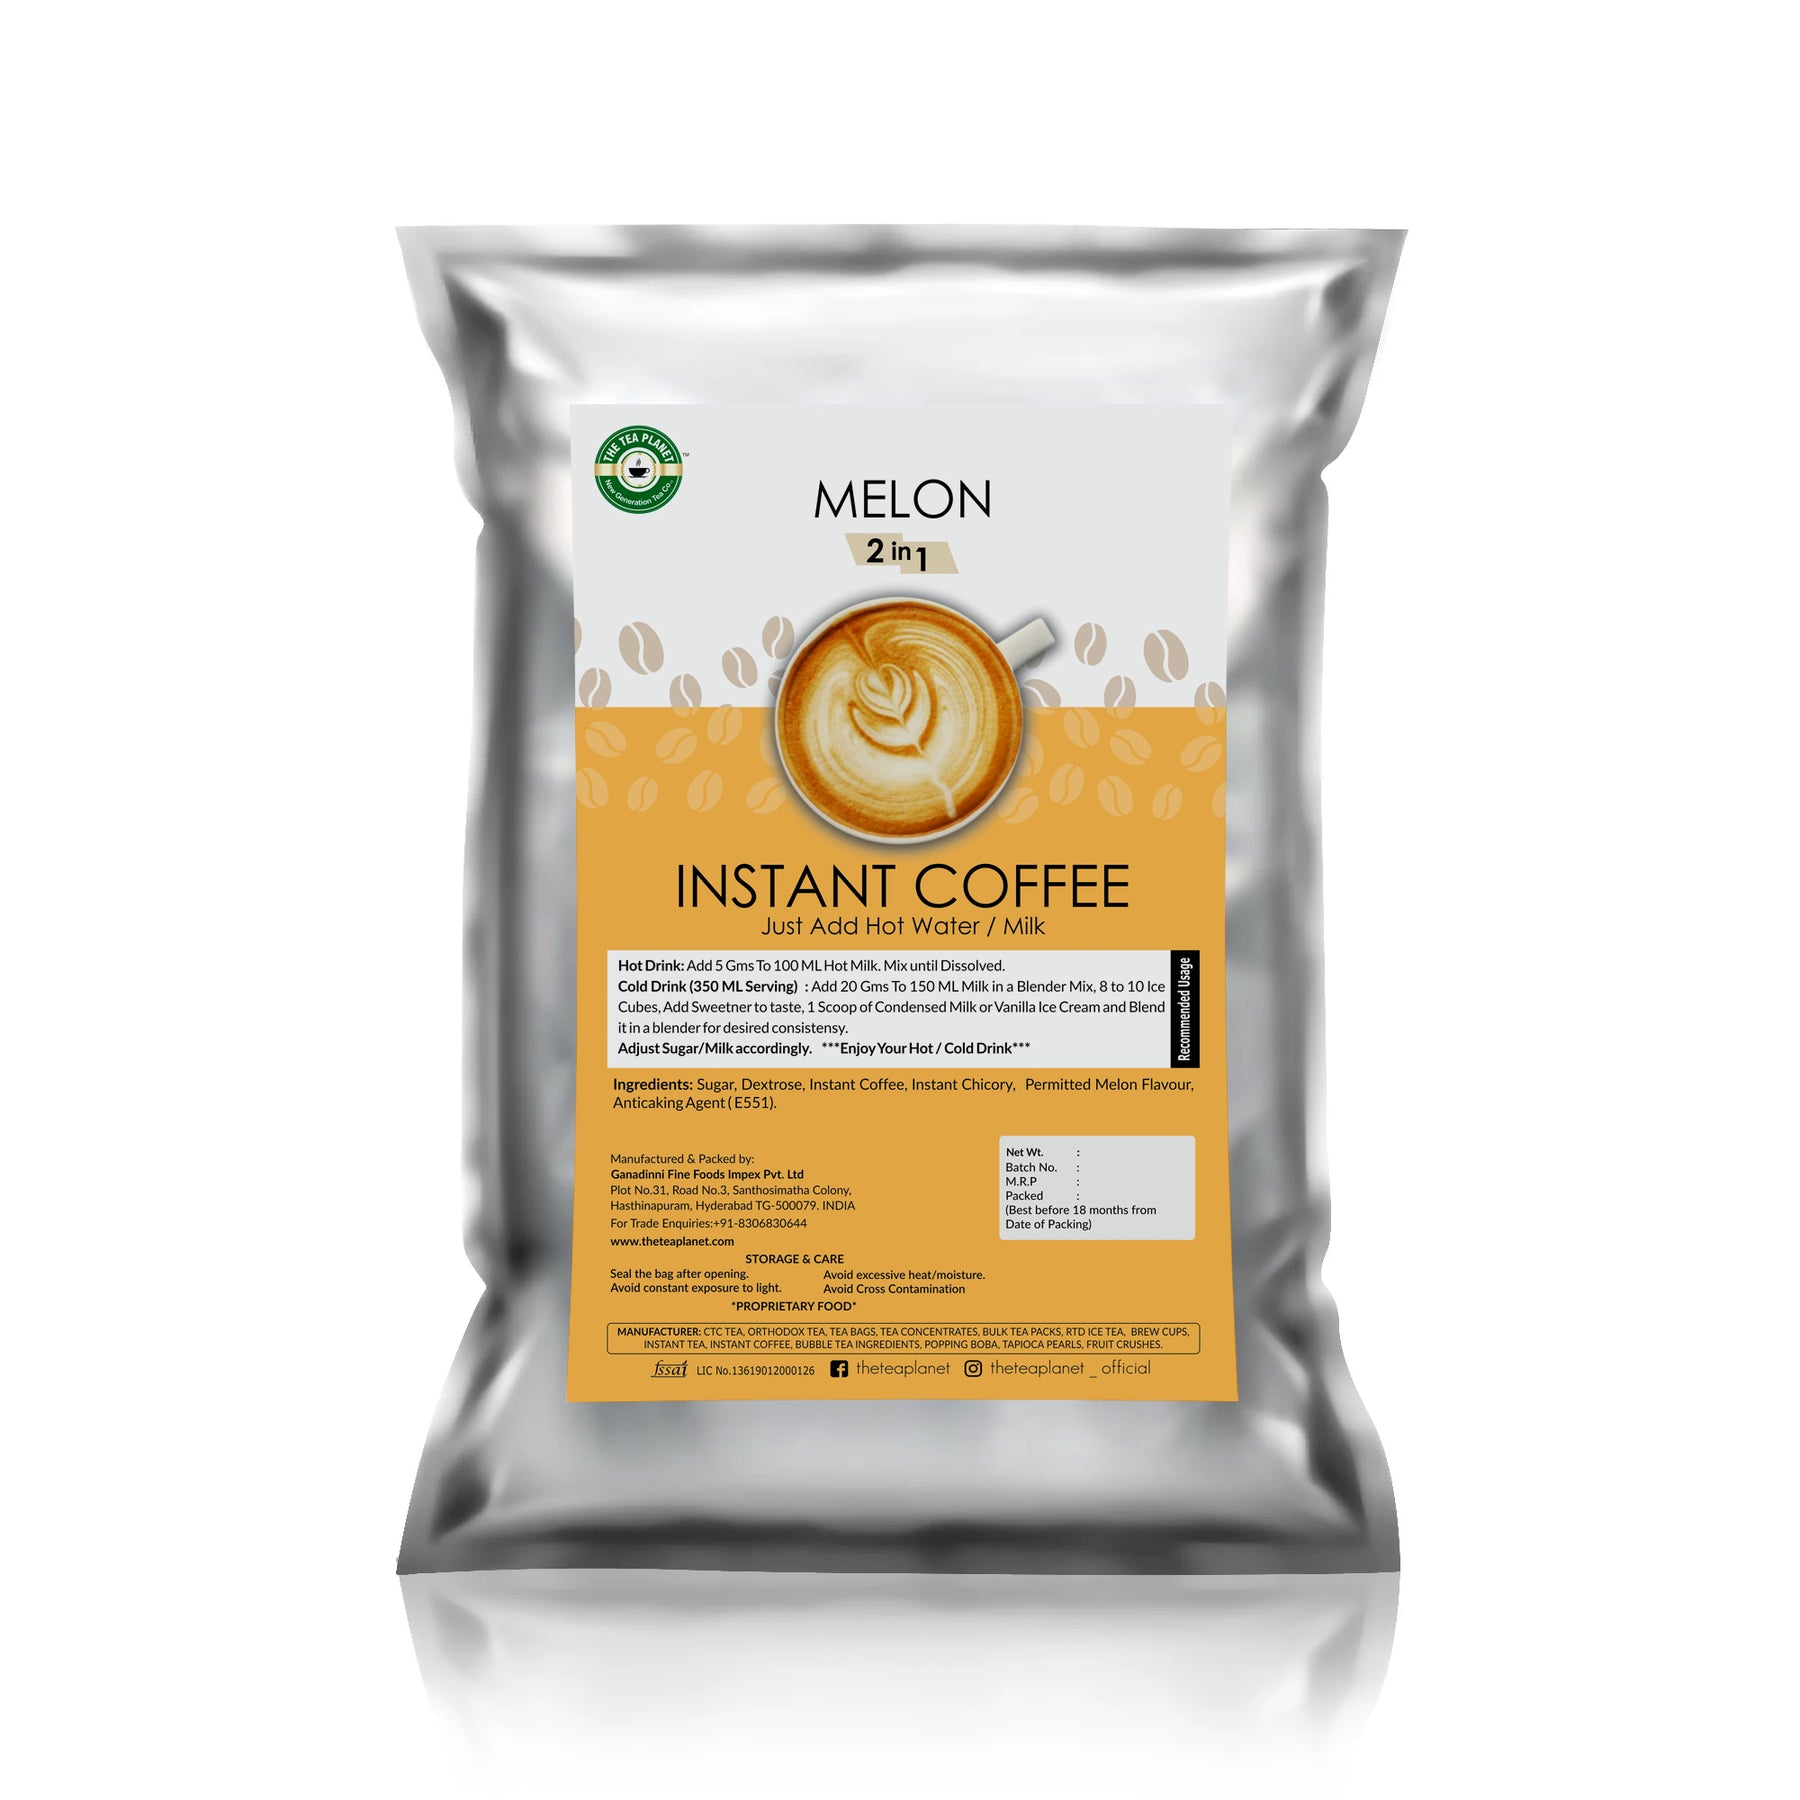 Melon Instant Coffee Premix (2 in 1) - 1kg